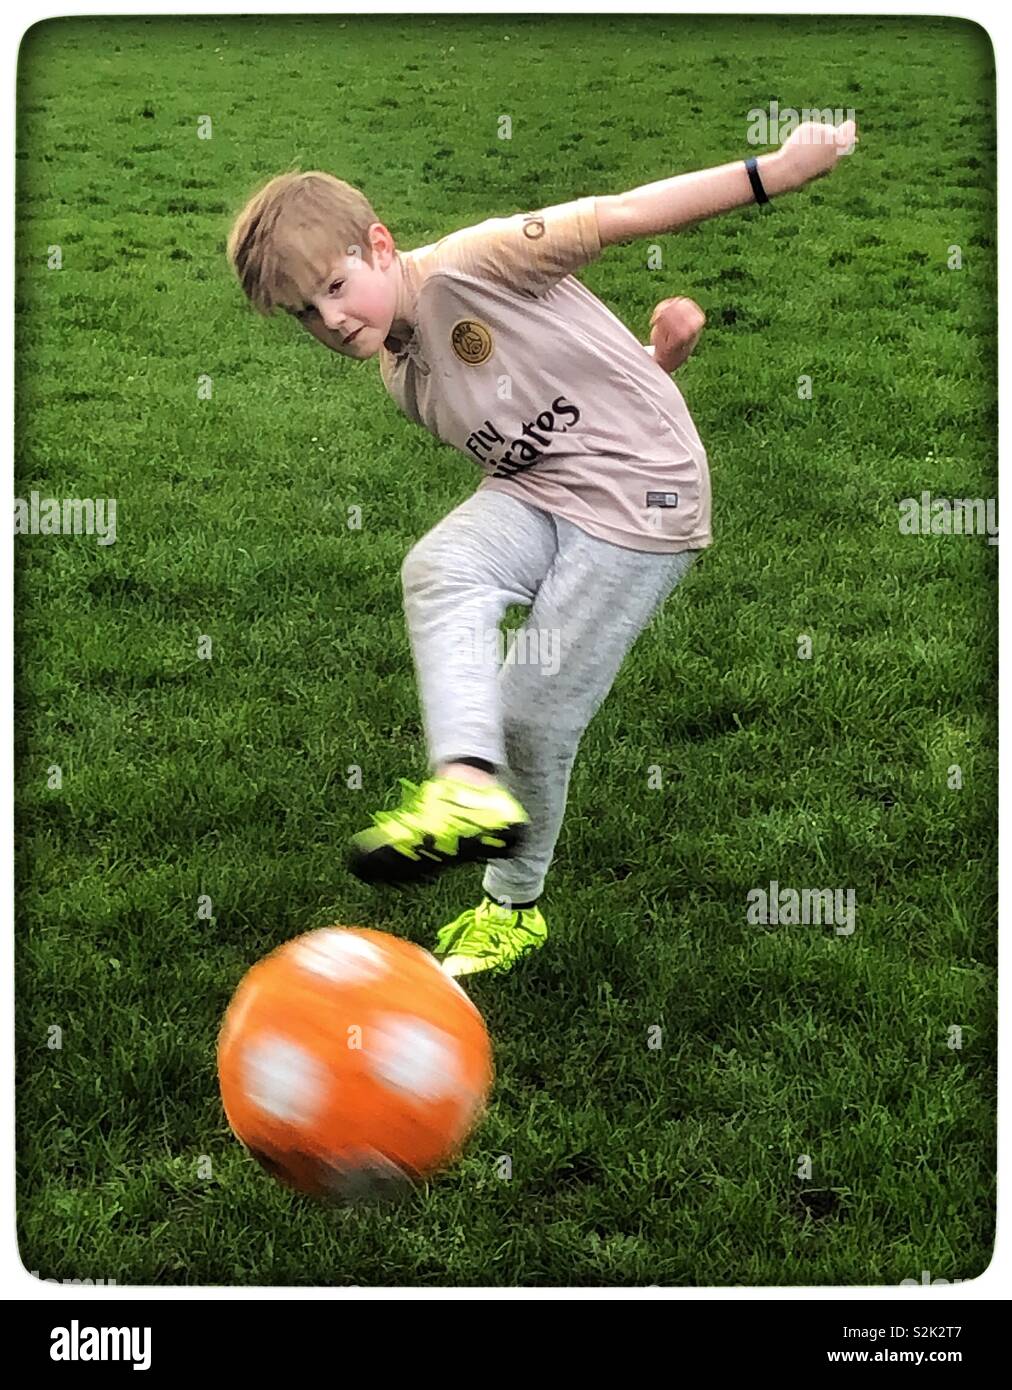 Boy kicking a football Stock Photo